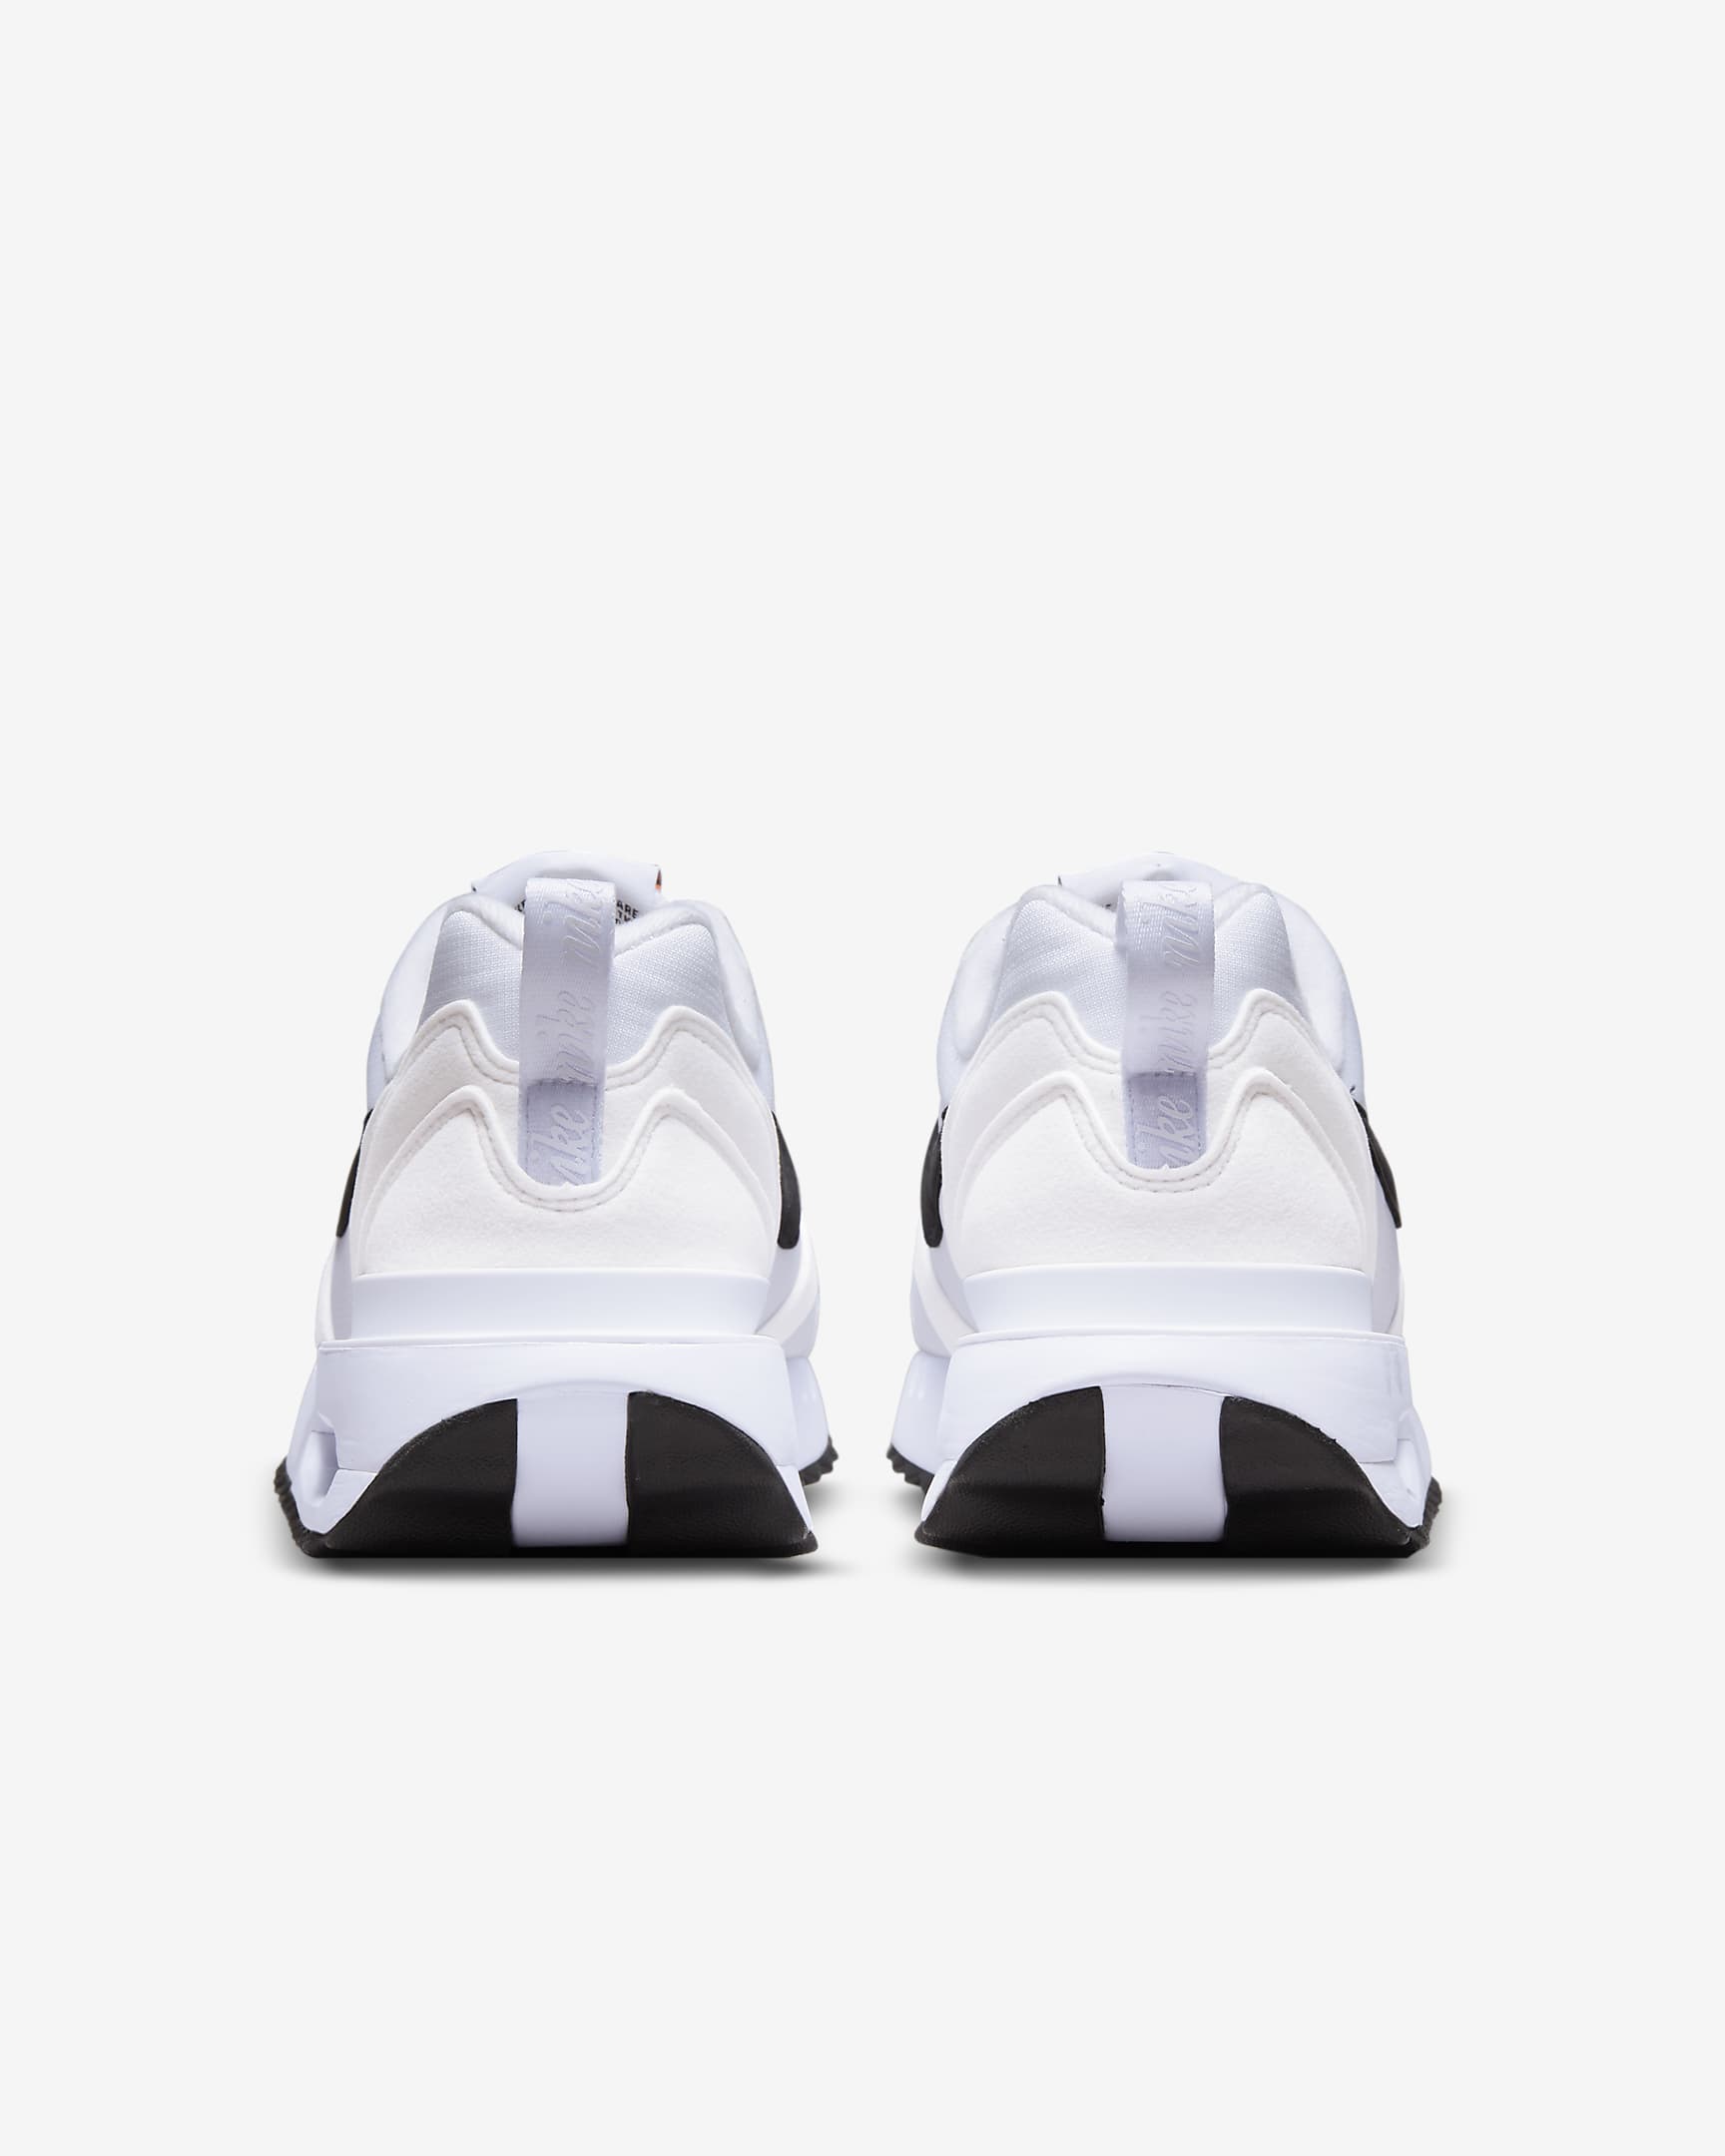 Nike Air Max Dawn Women's Shoes - White/Total Orange/Black